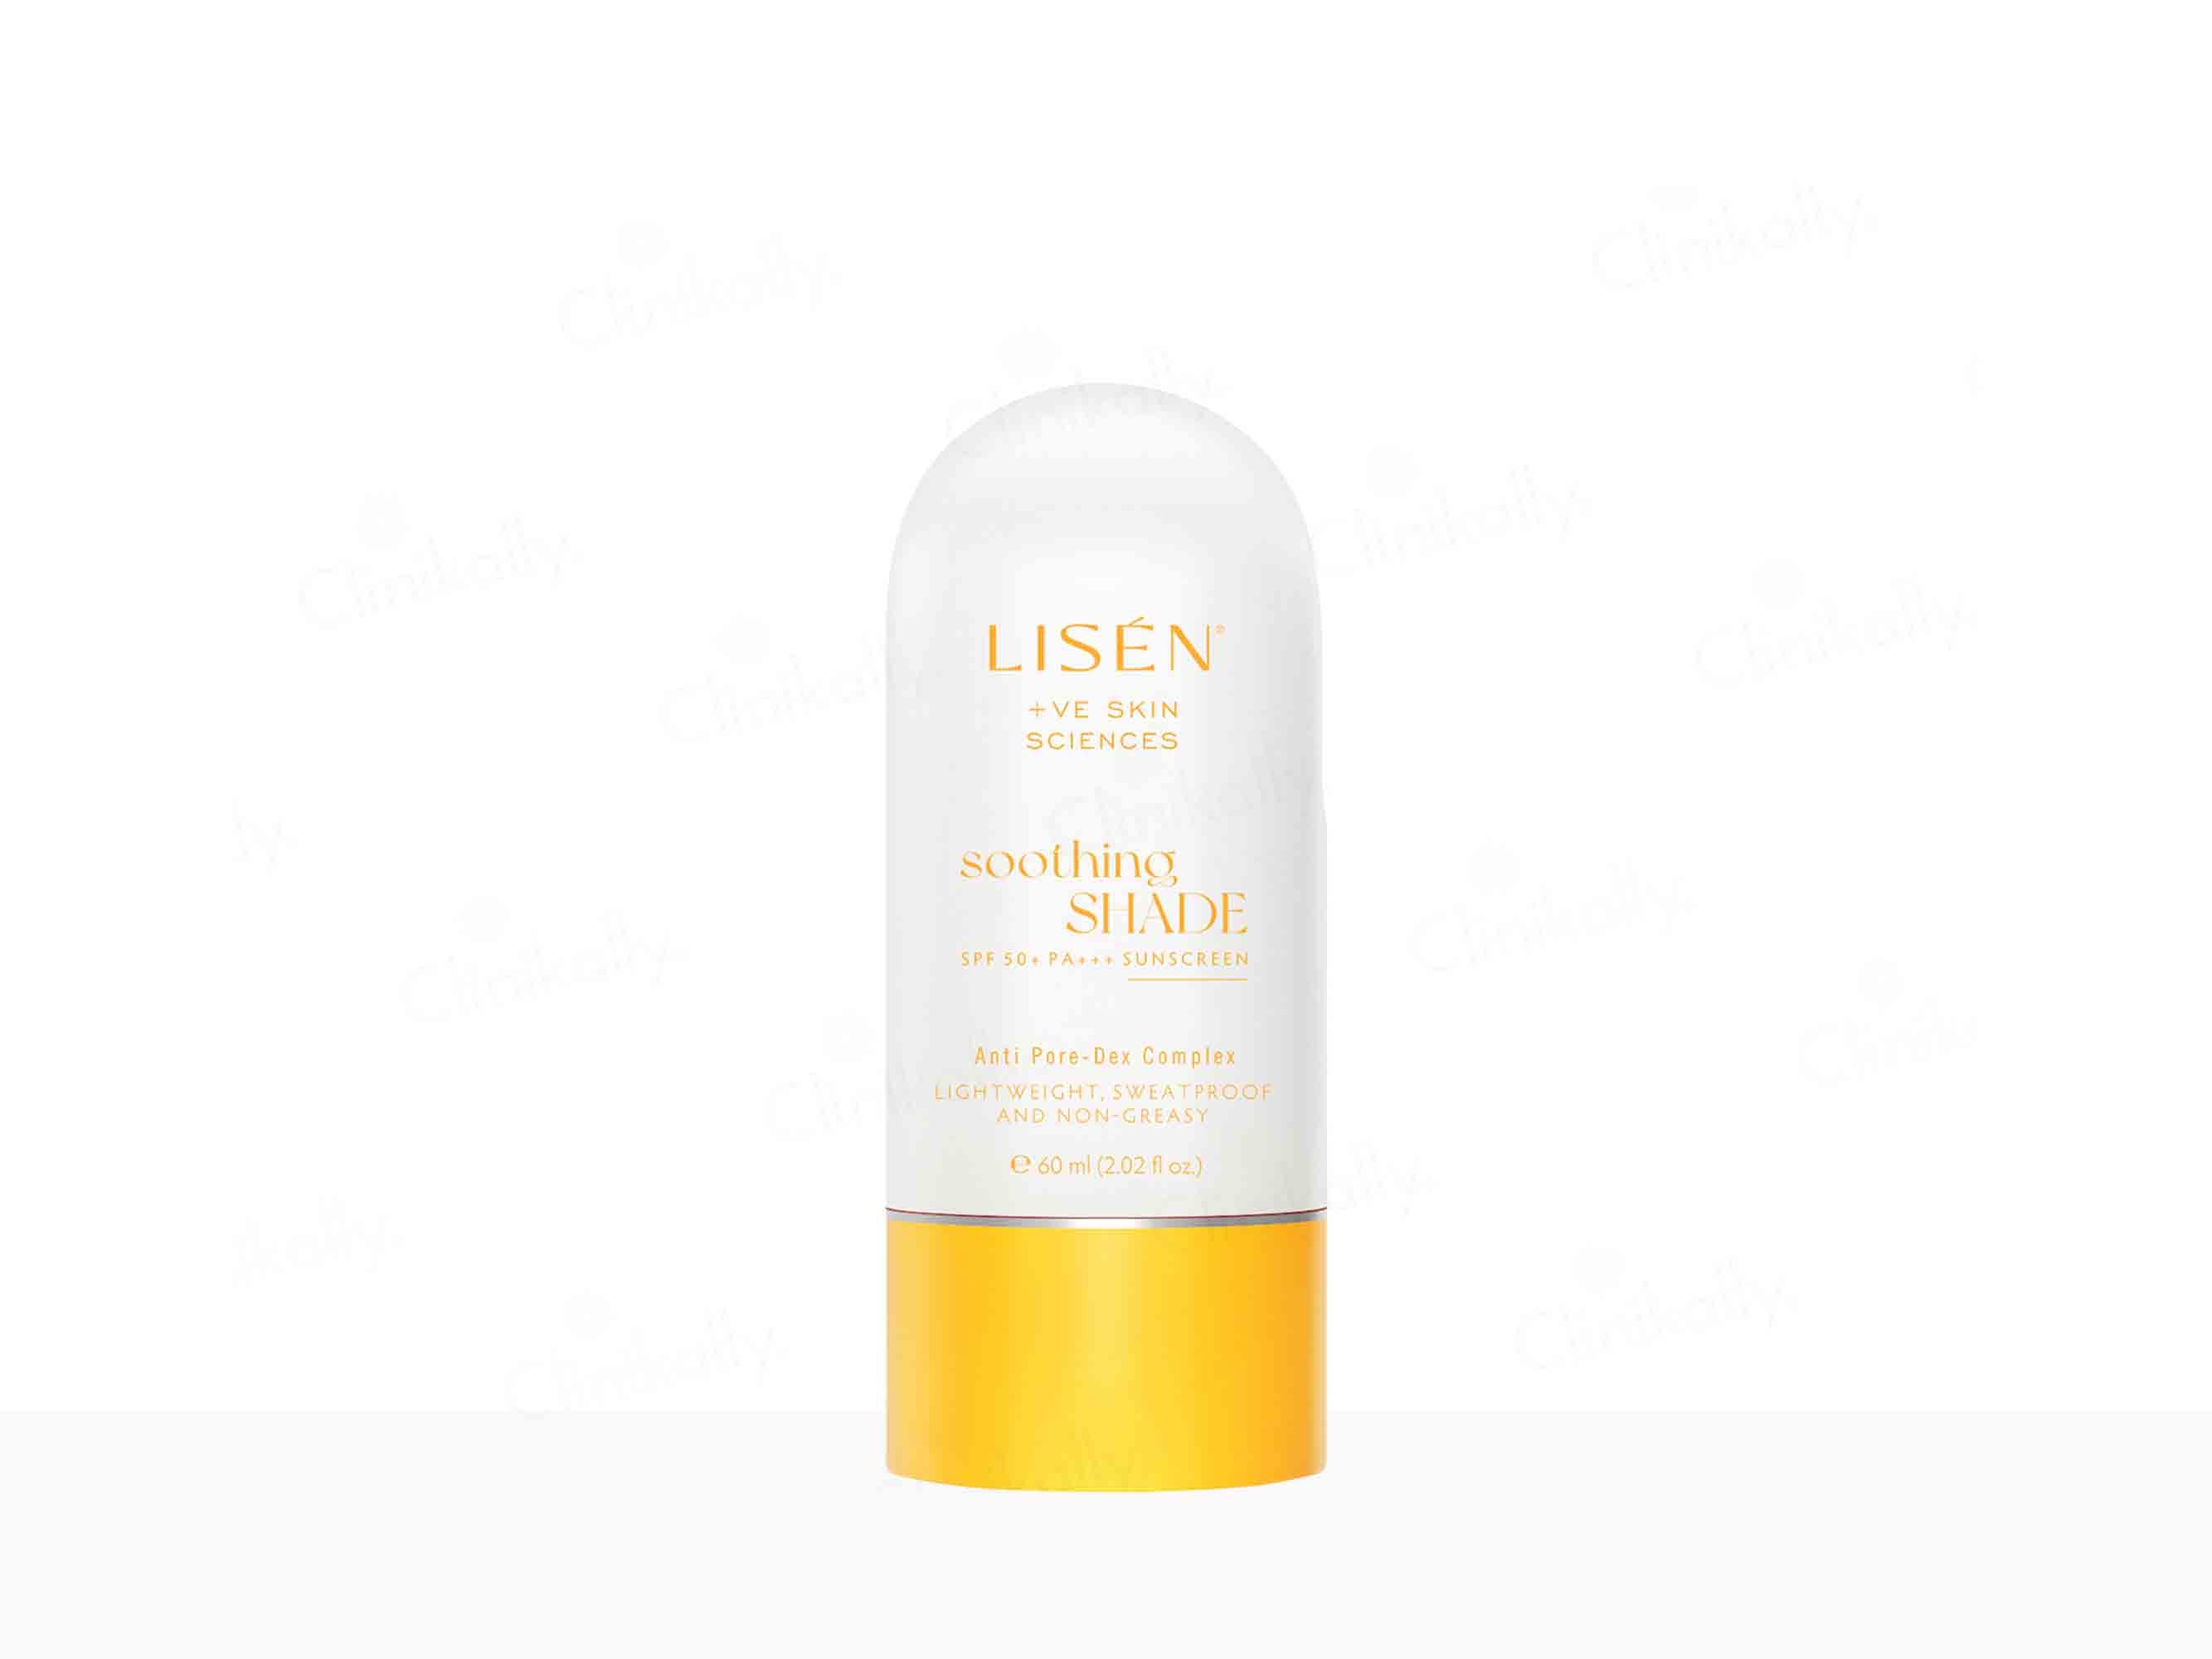 LISEN Soothing Shade Sunscreen SPF 50+ PA+++